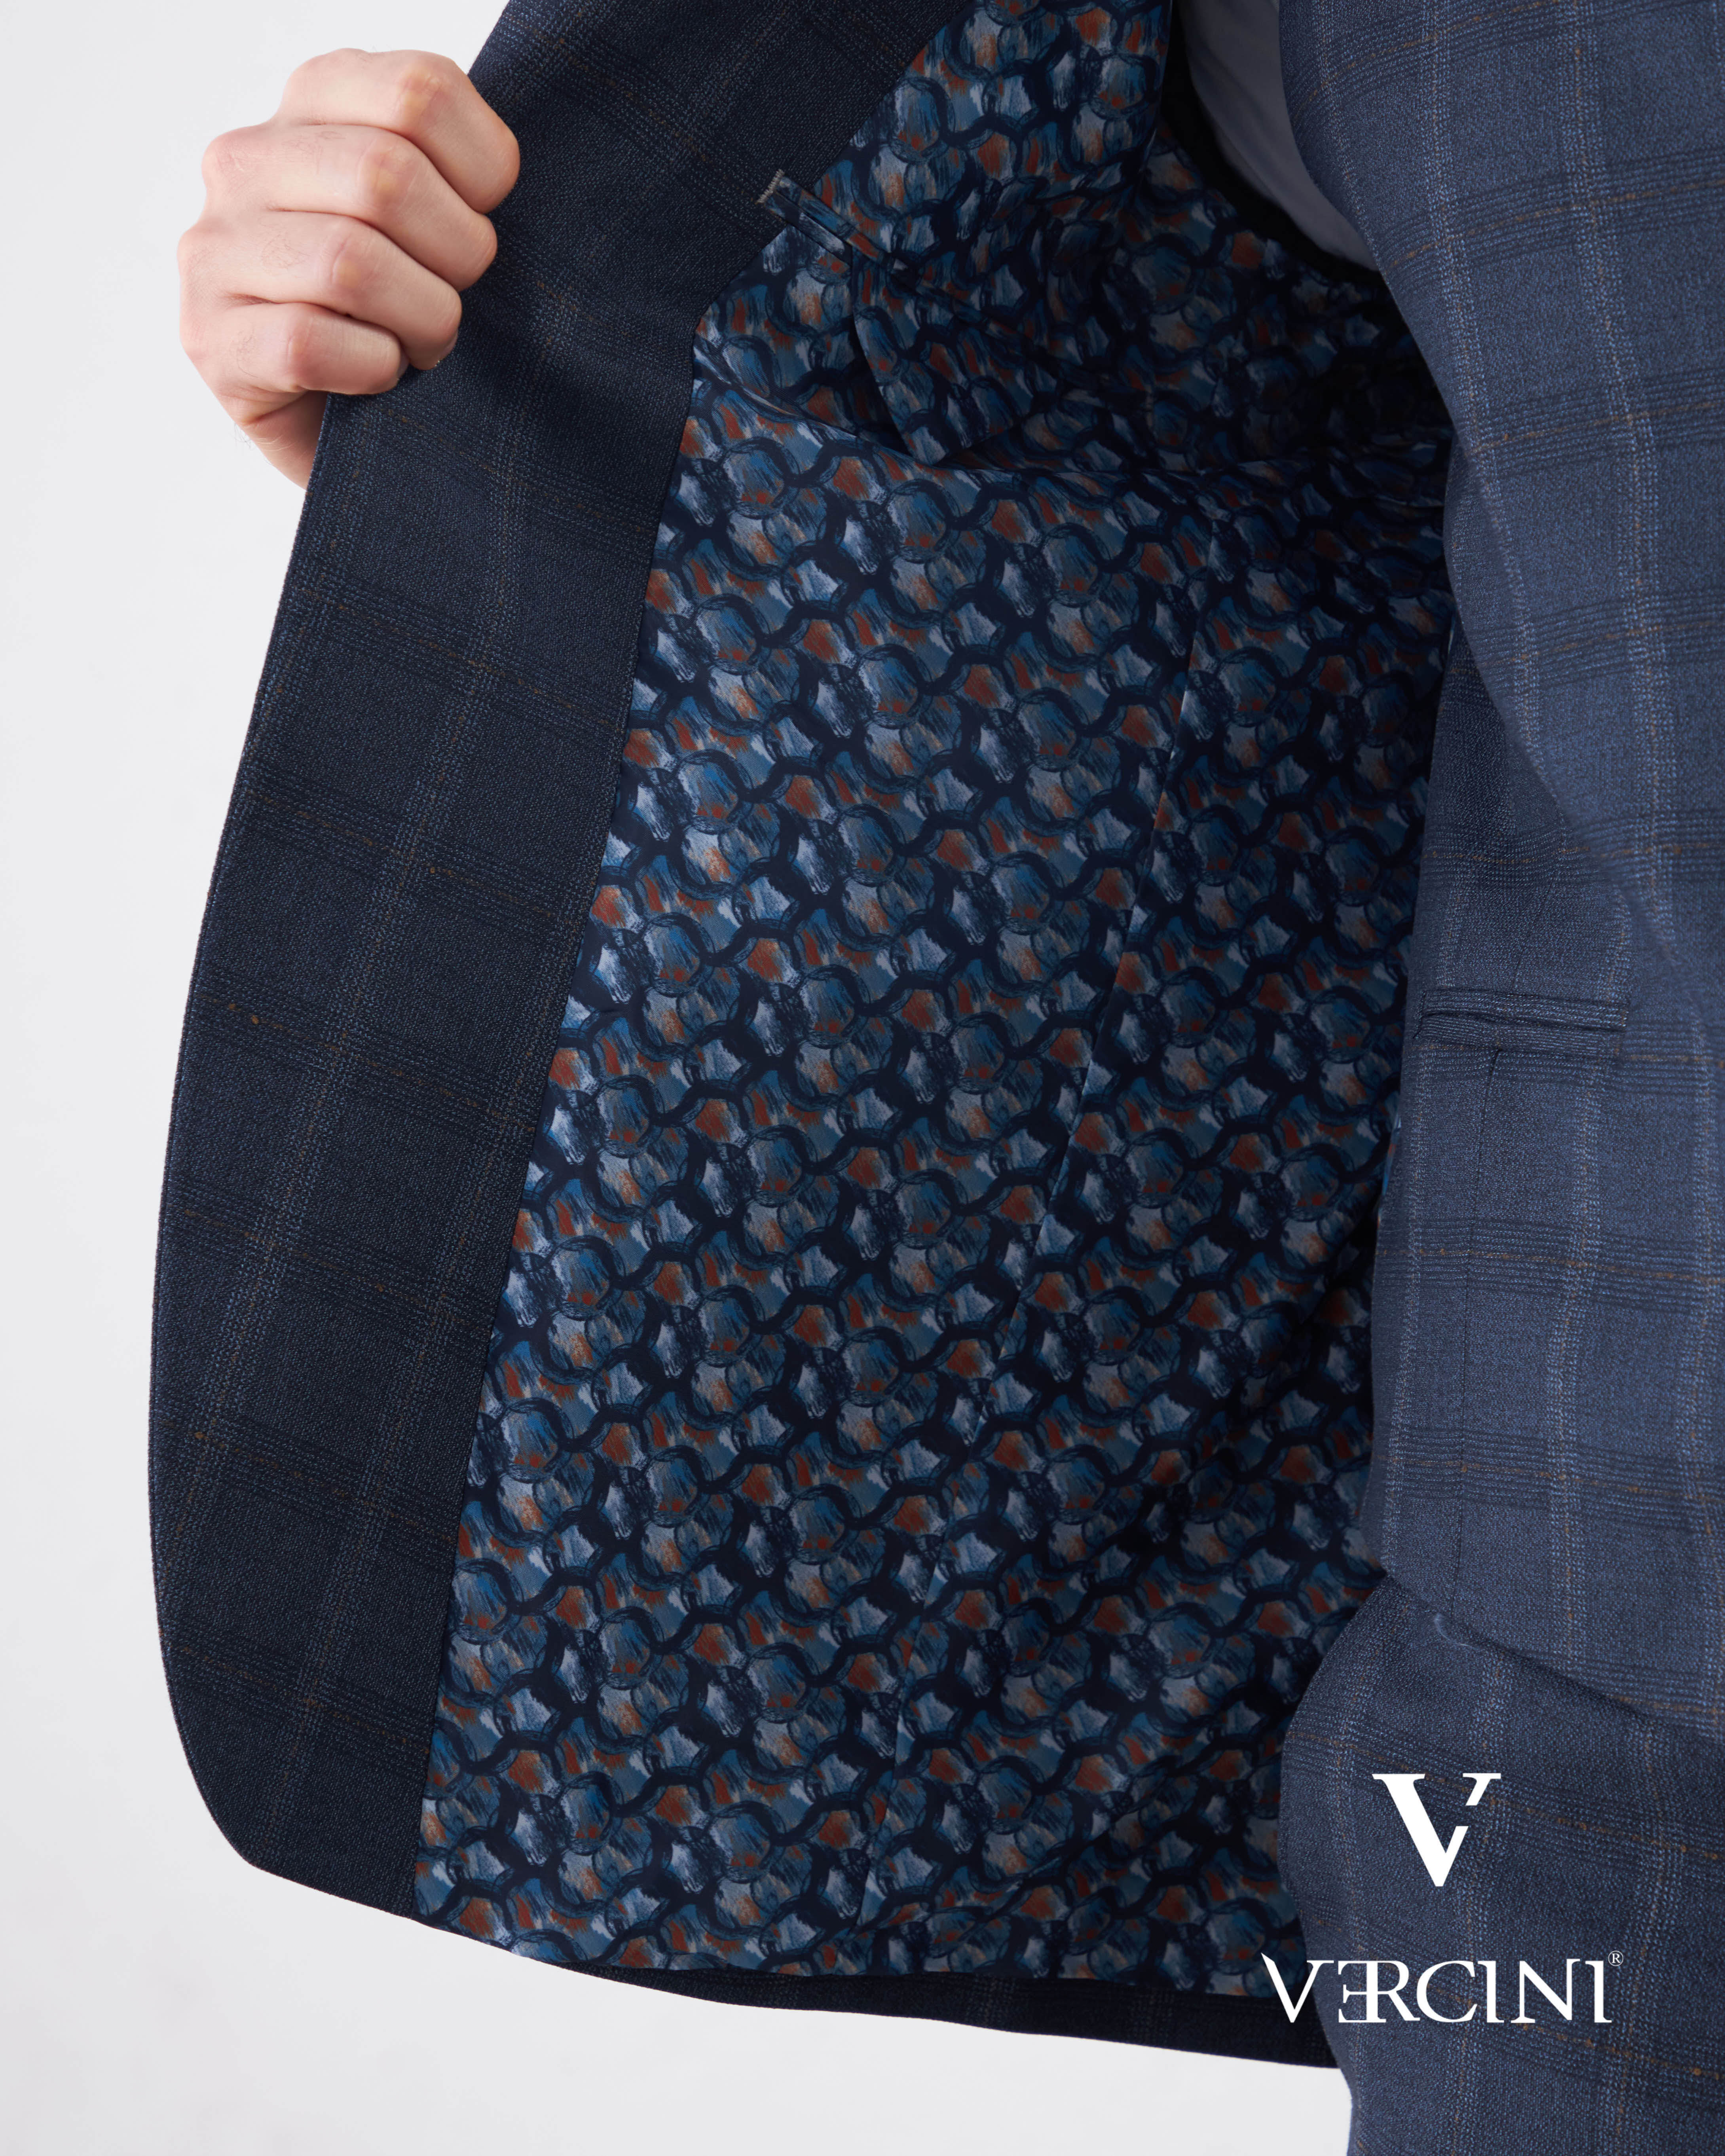 Vercini Sapphire Orbit Prestige Three-Piece Men's Suit